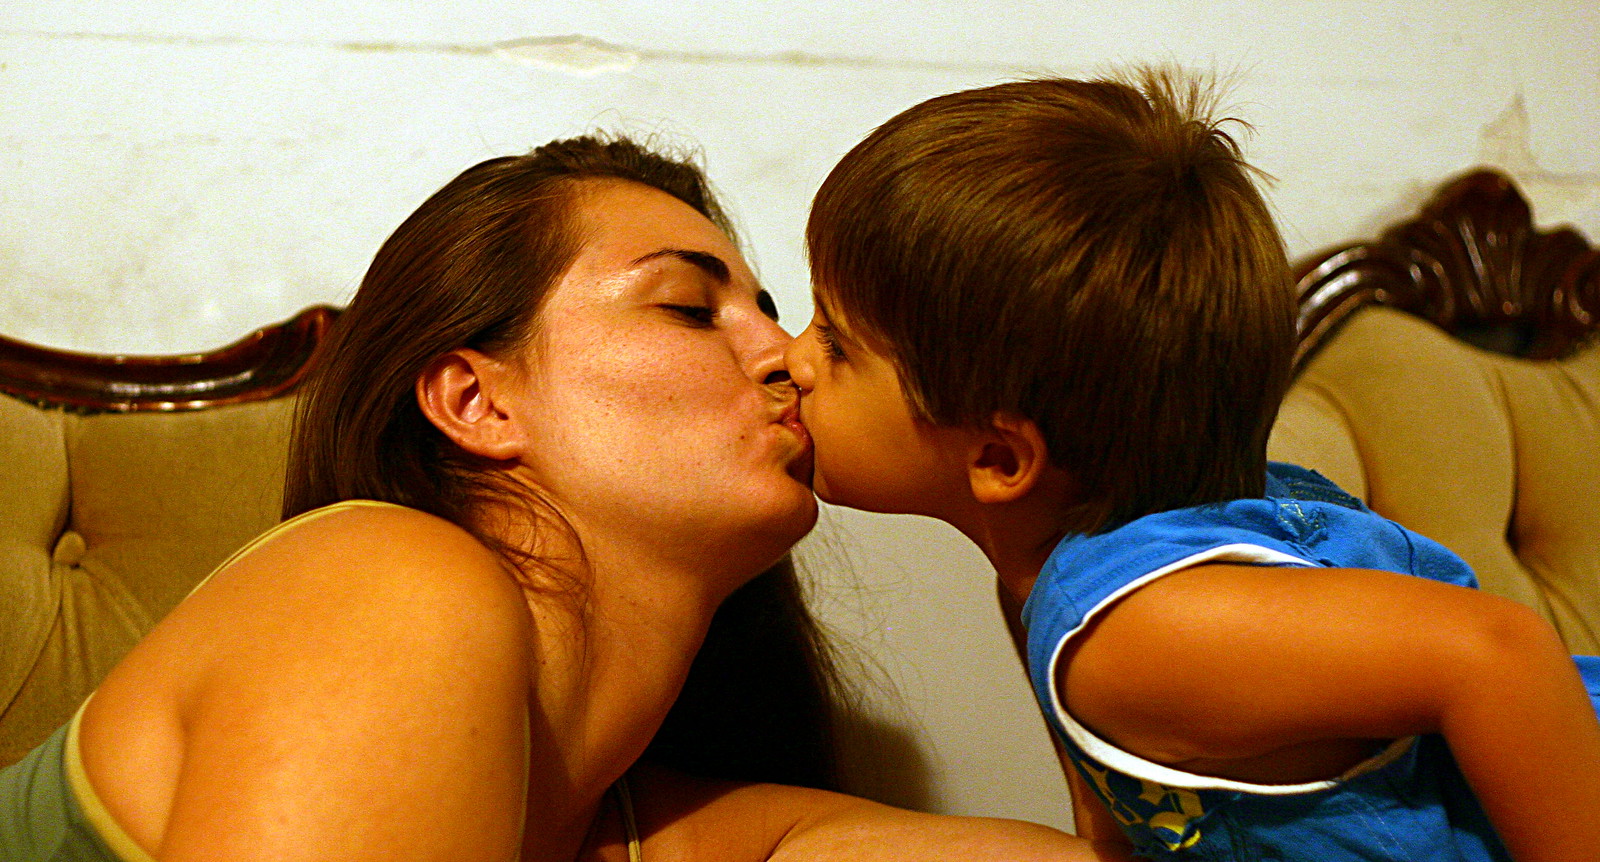 Homemade sister. Поцелуй сына. Поцелуй женщины и мальчика. Женщина целует ребенка в губы. Мальчик целует маму в губы.